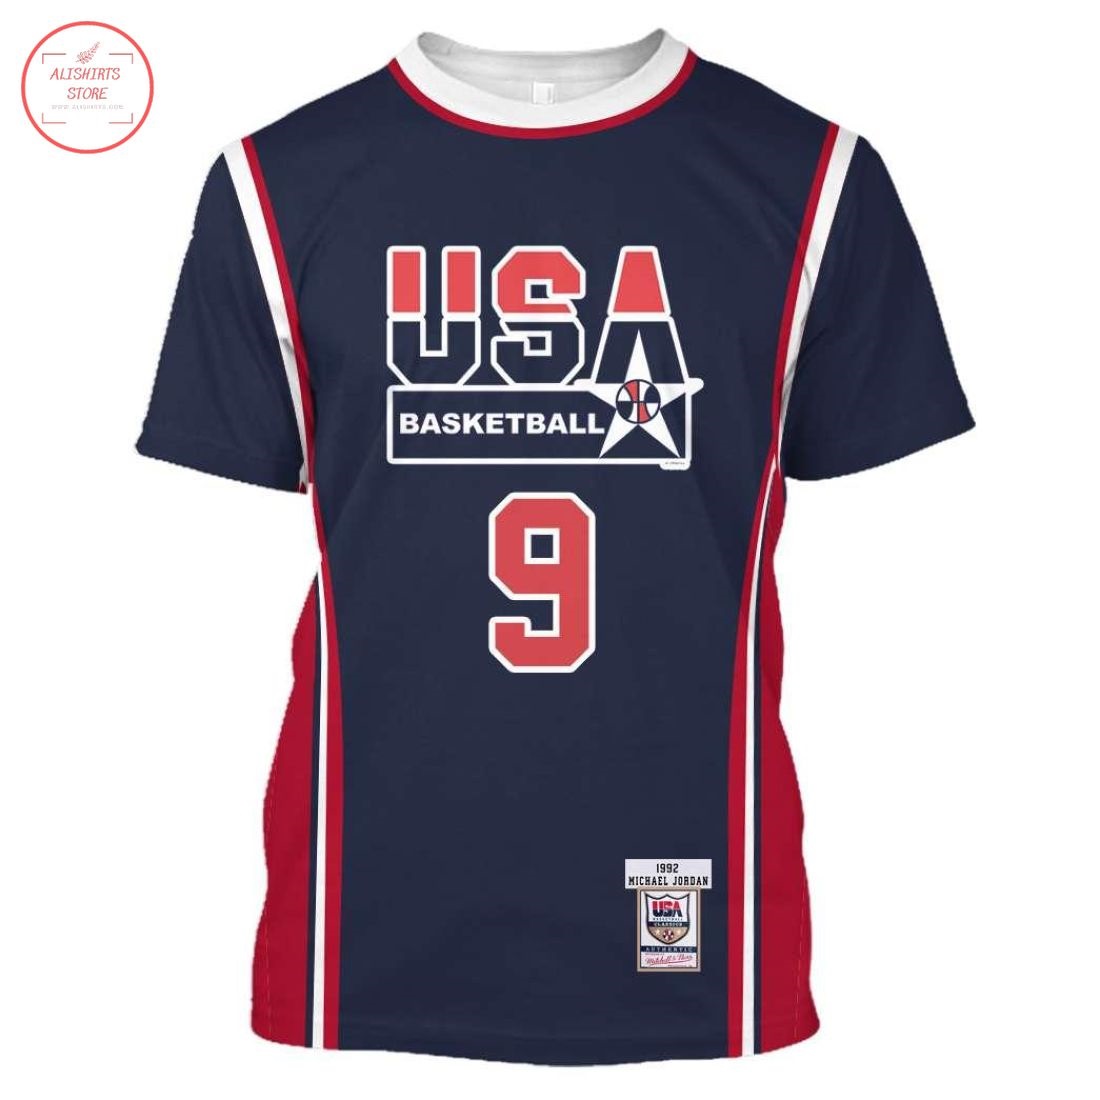 Michael Jordan 9 Limited Edition USA Shirt